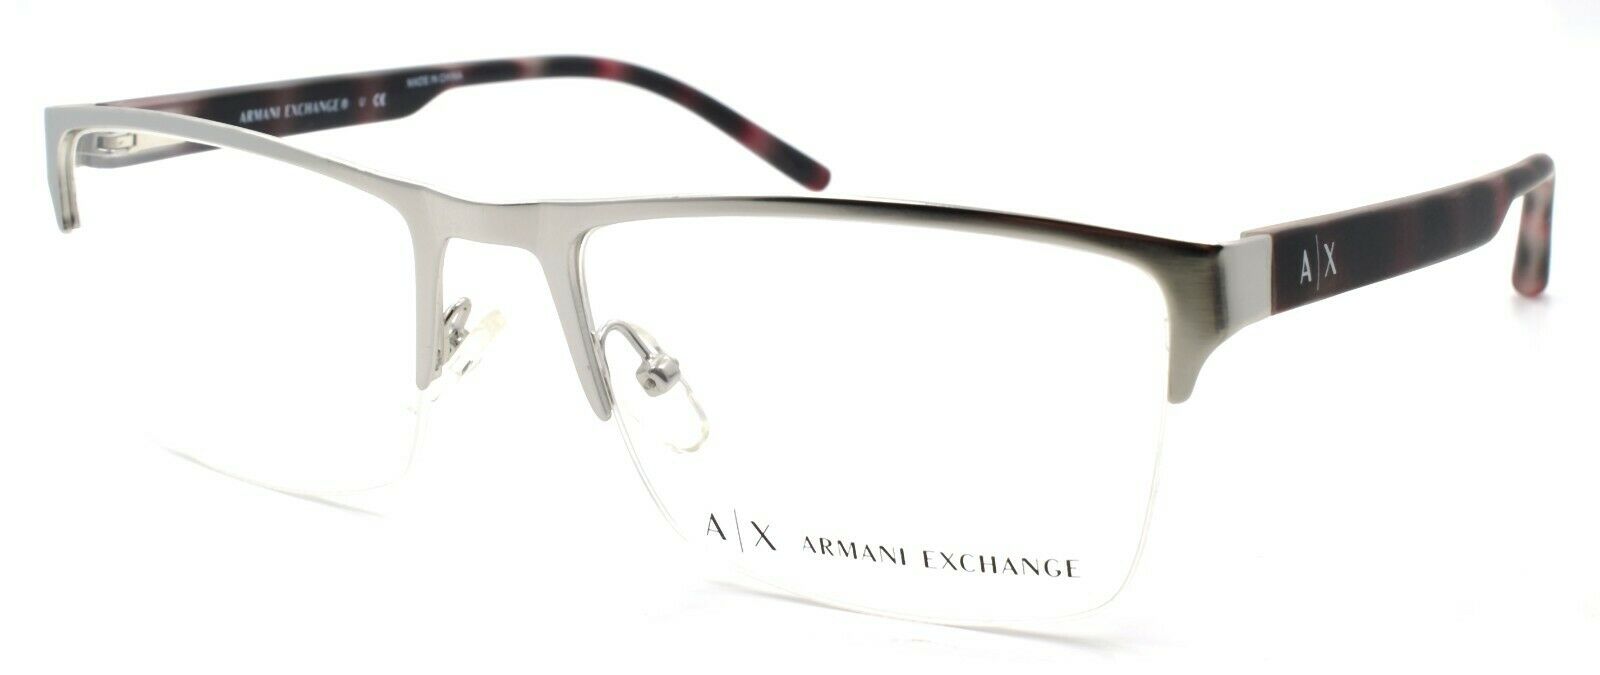 1-Armani Exchange AX1026 6020 Men's Eyeglasses Frames Half-rim 54-18-140 Silver-8053672798234-IKSpecs